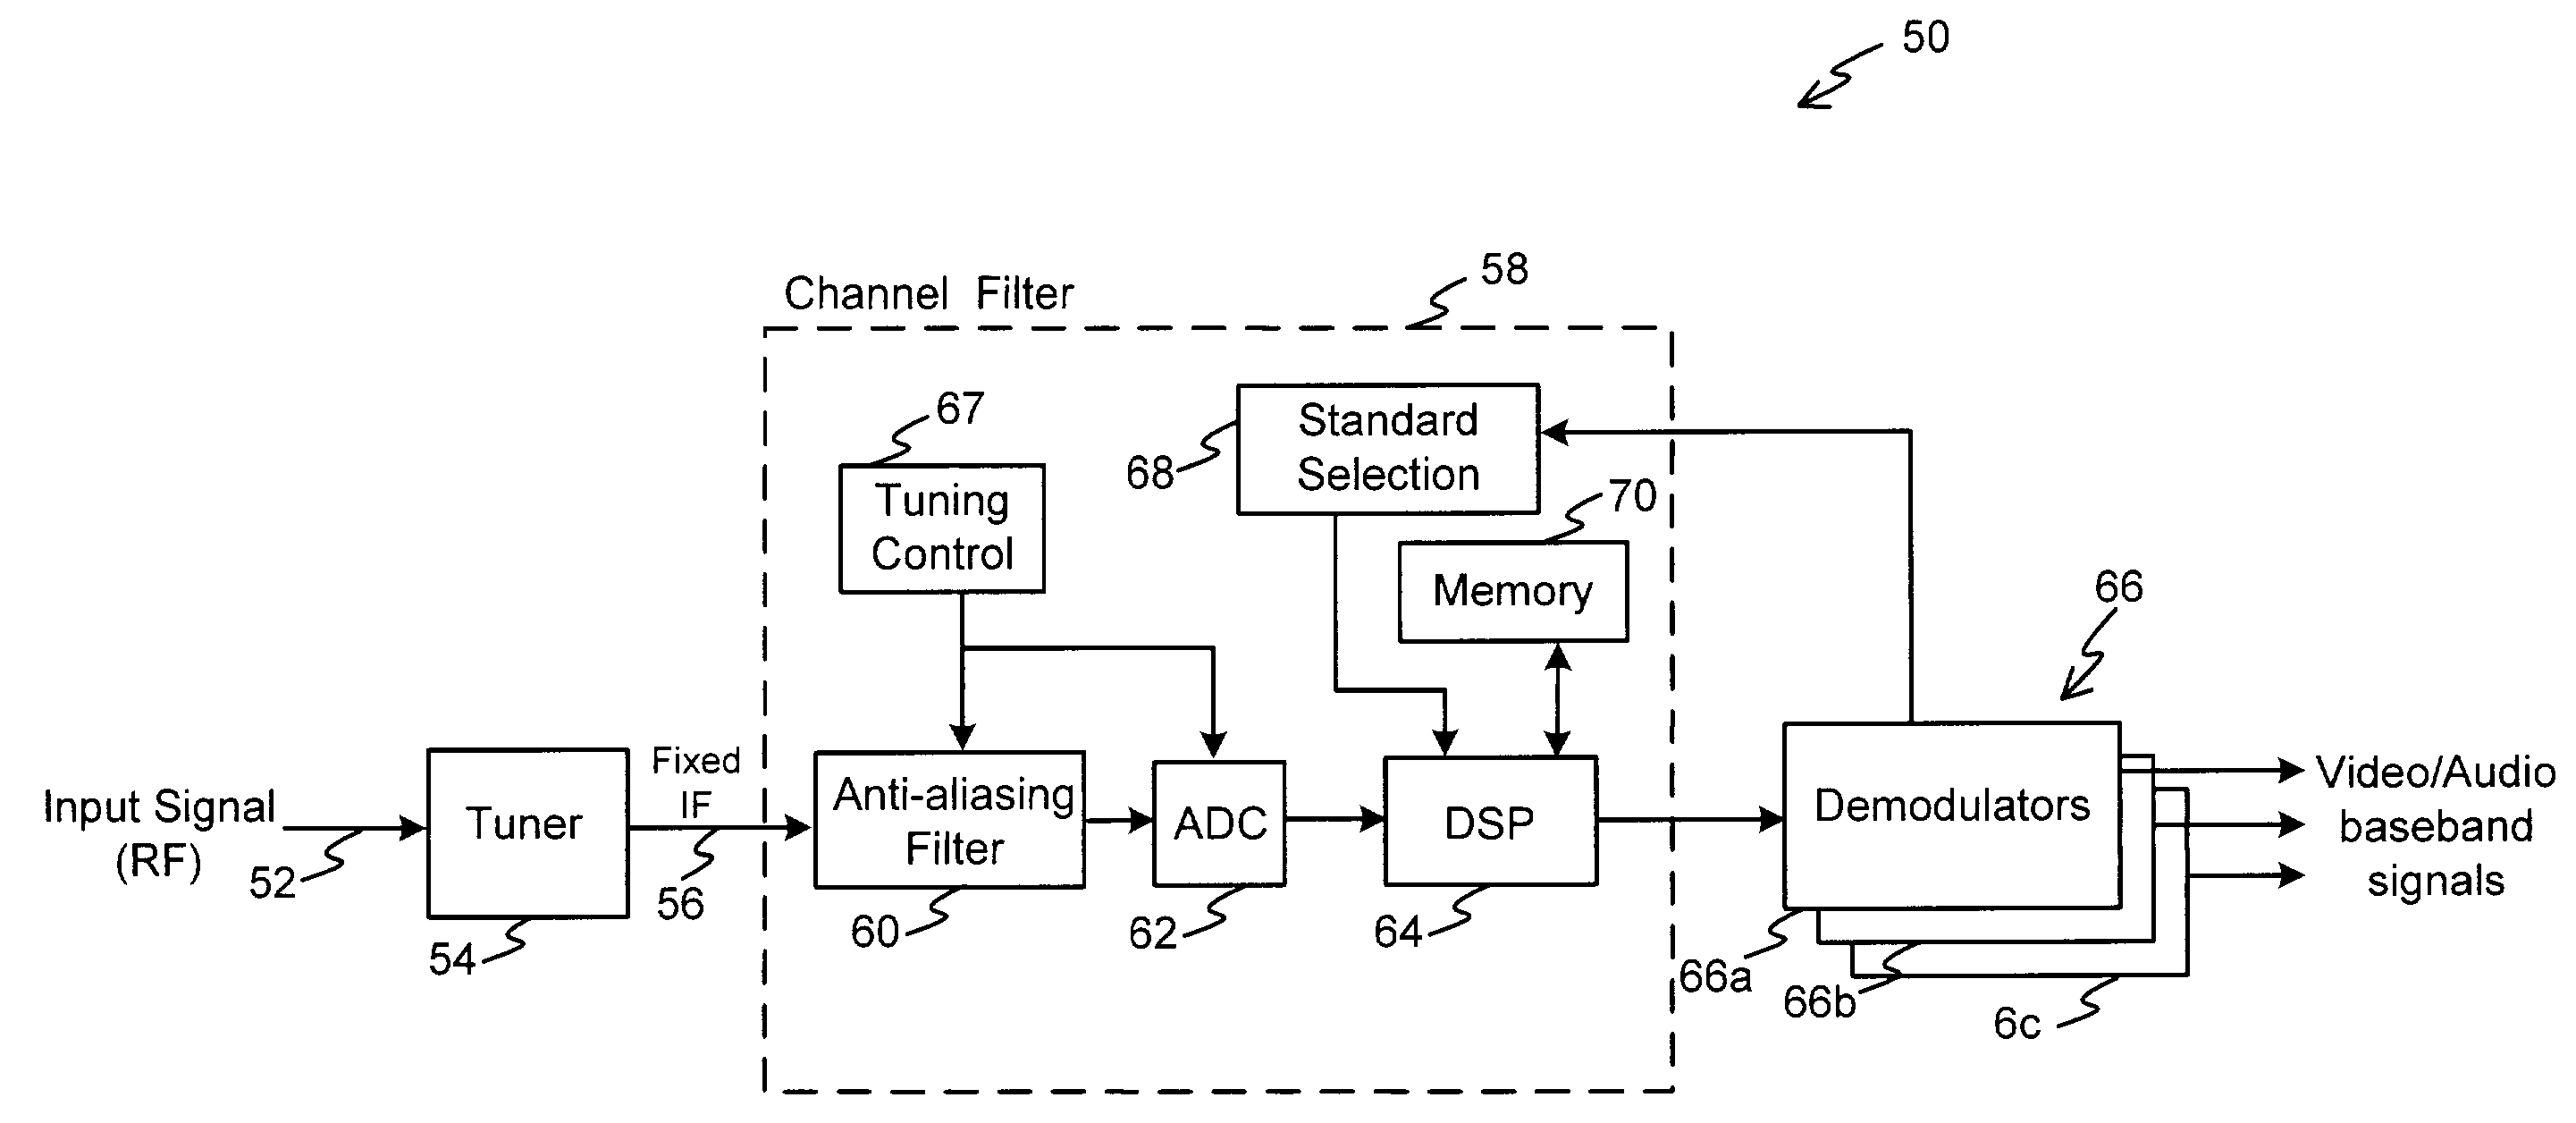 Broadband receiver having a multistandard channel filter